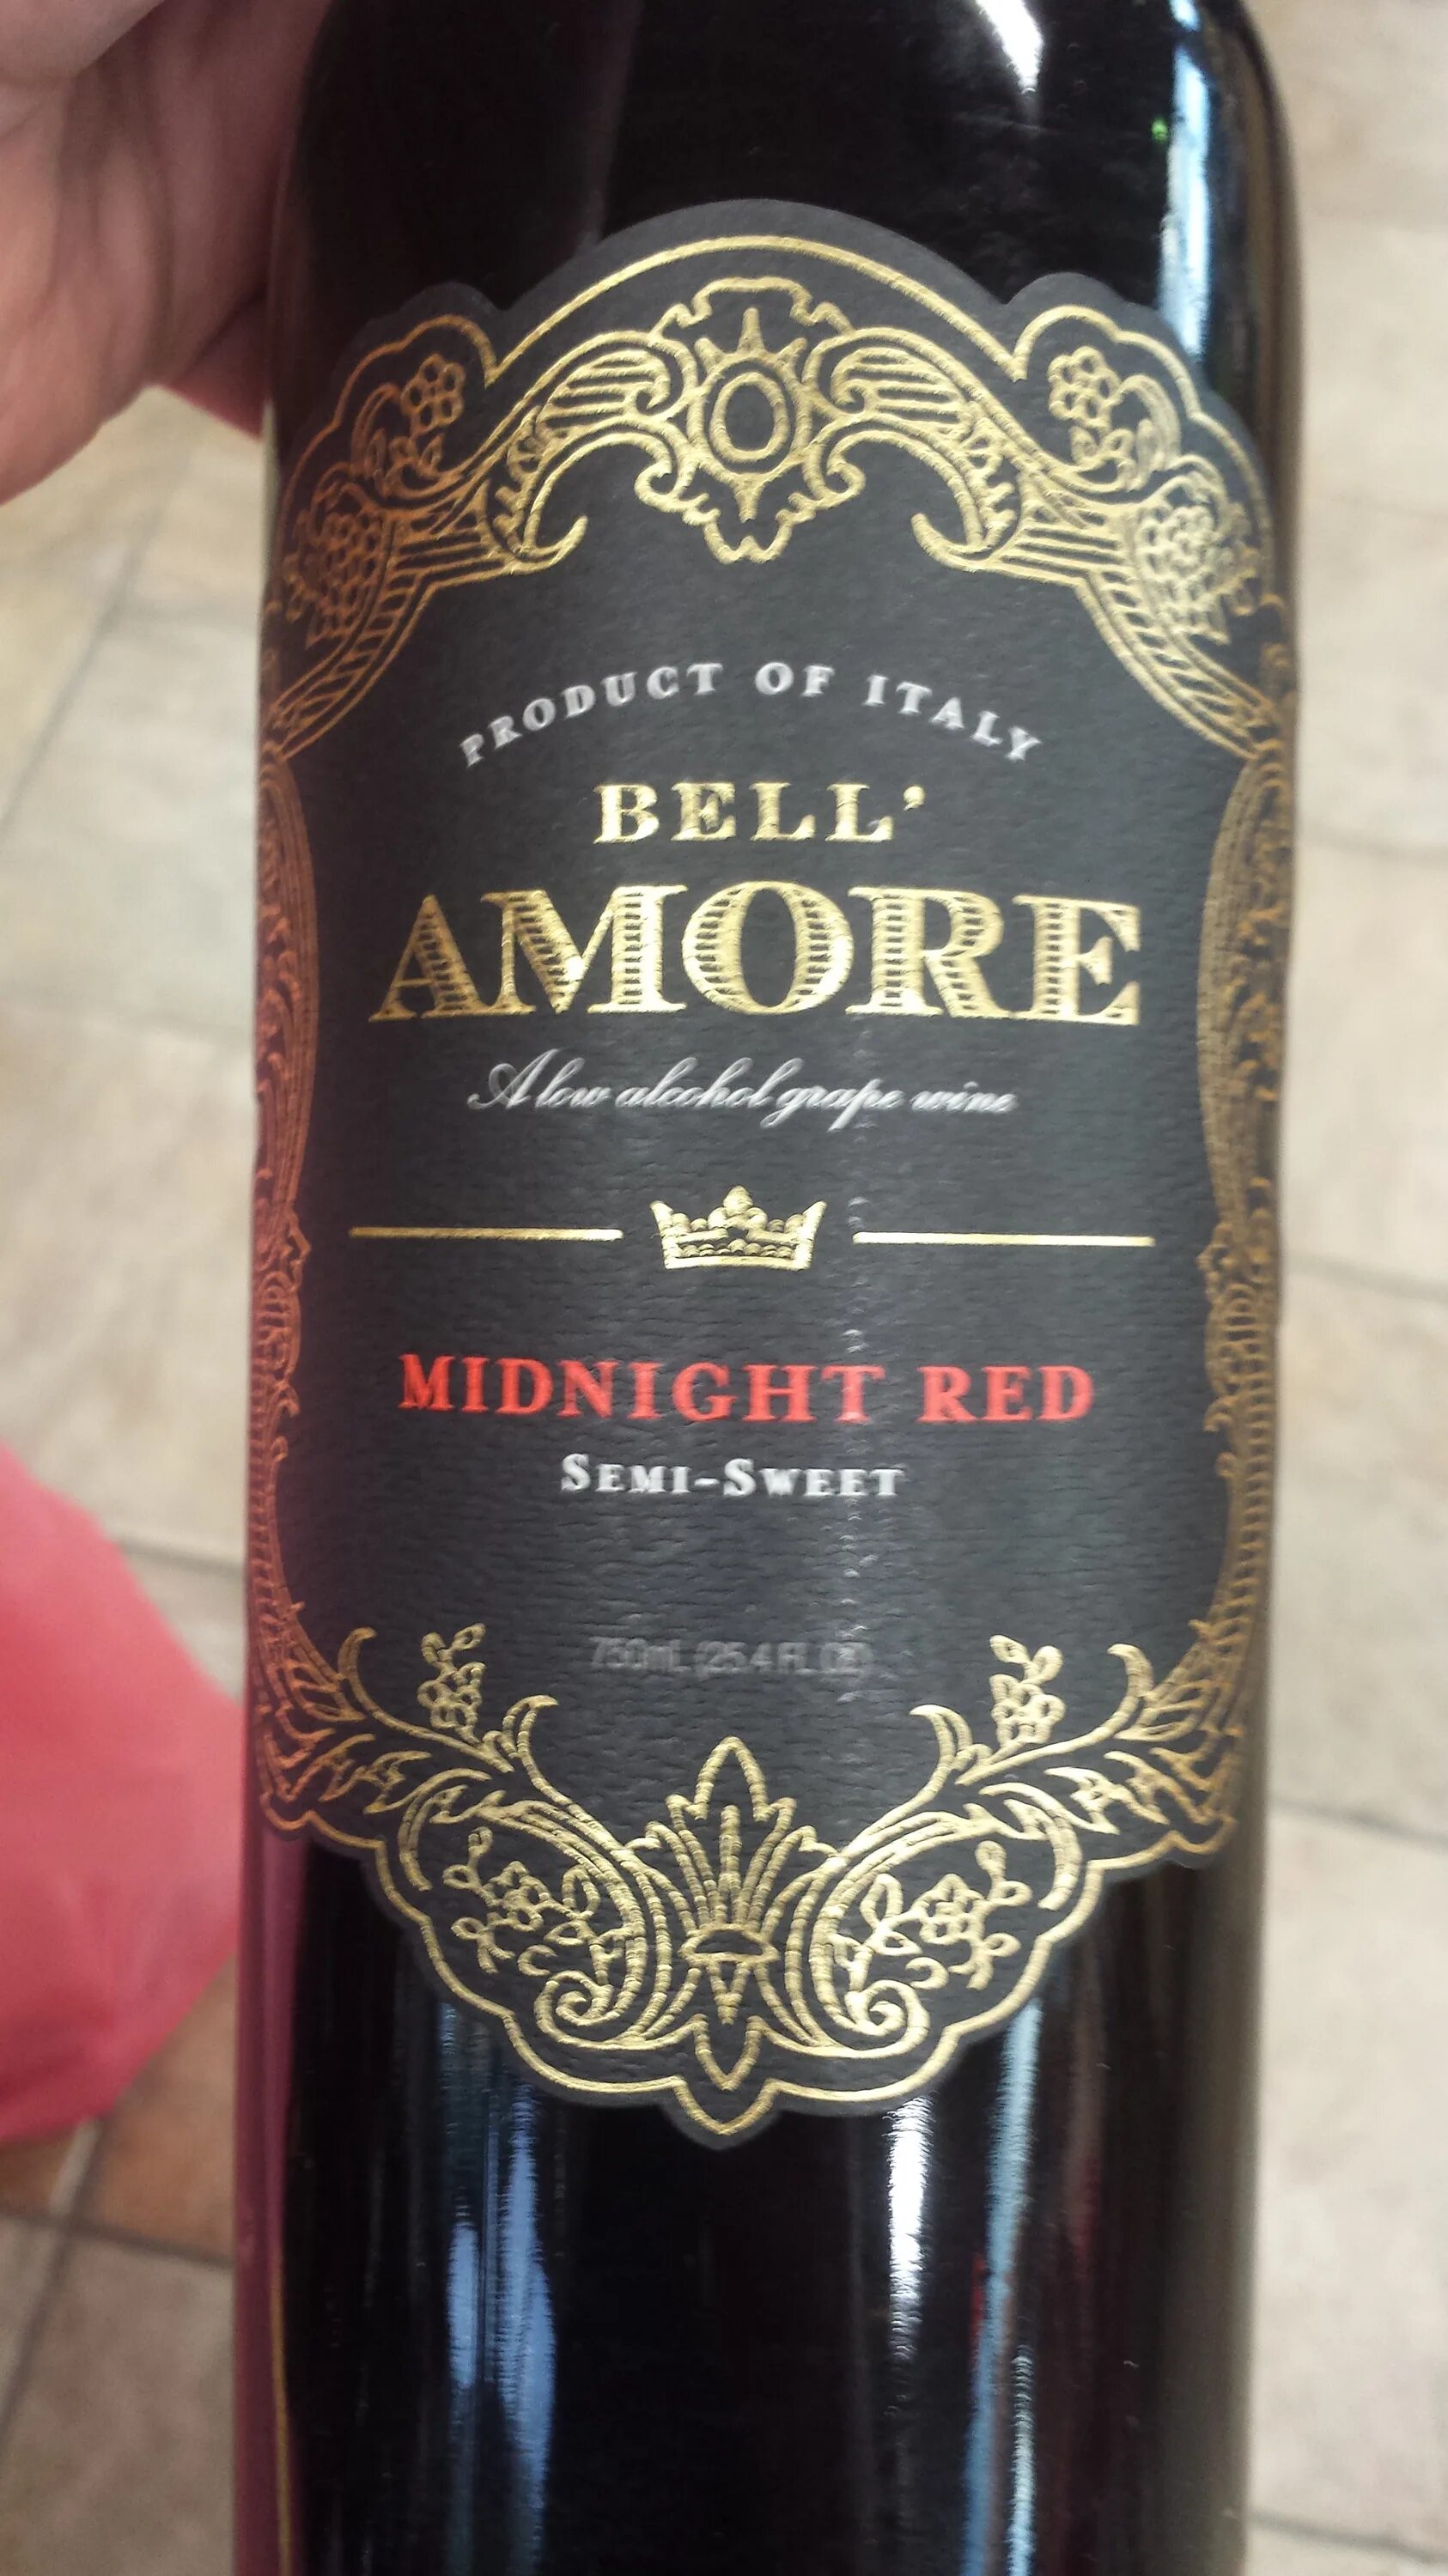 Шампанское аморе. Вино Amore. Lamore вино. Амор Амор. Amore more напиток.